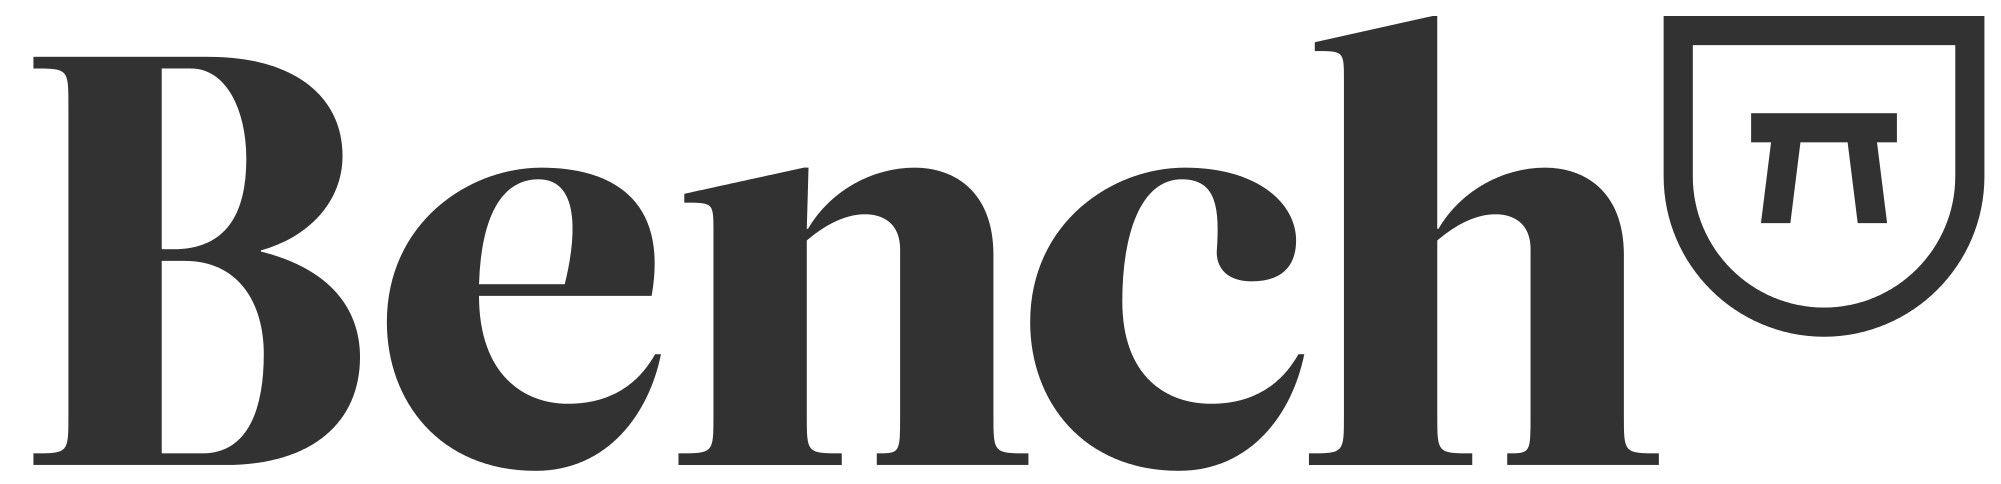 Bench Logo - Bench Logo